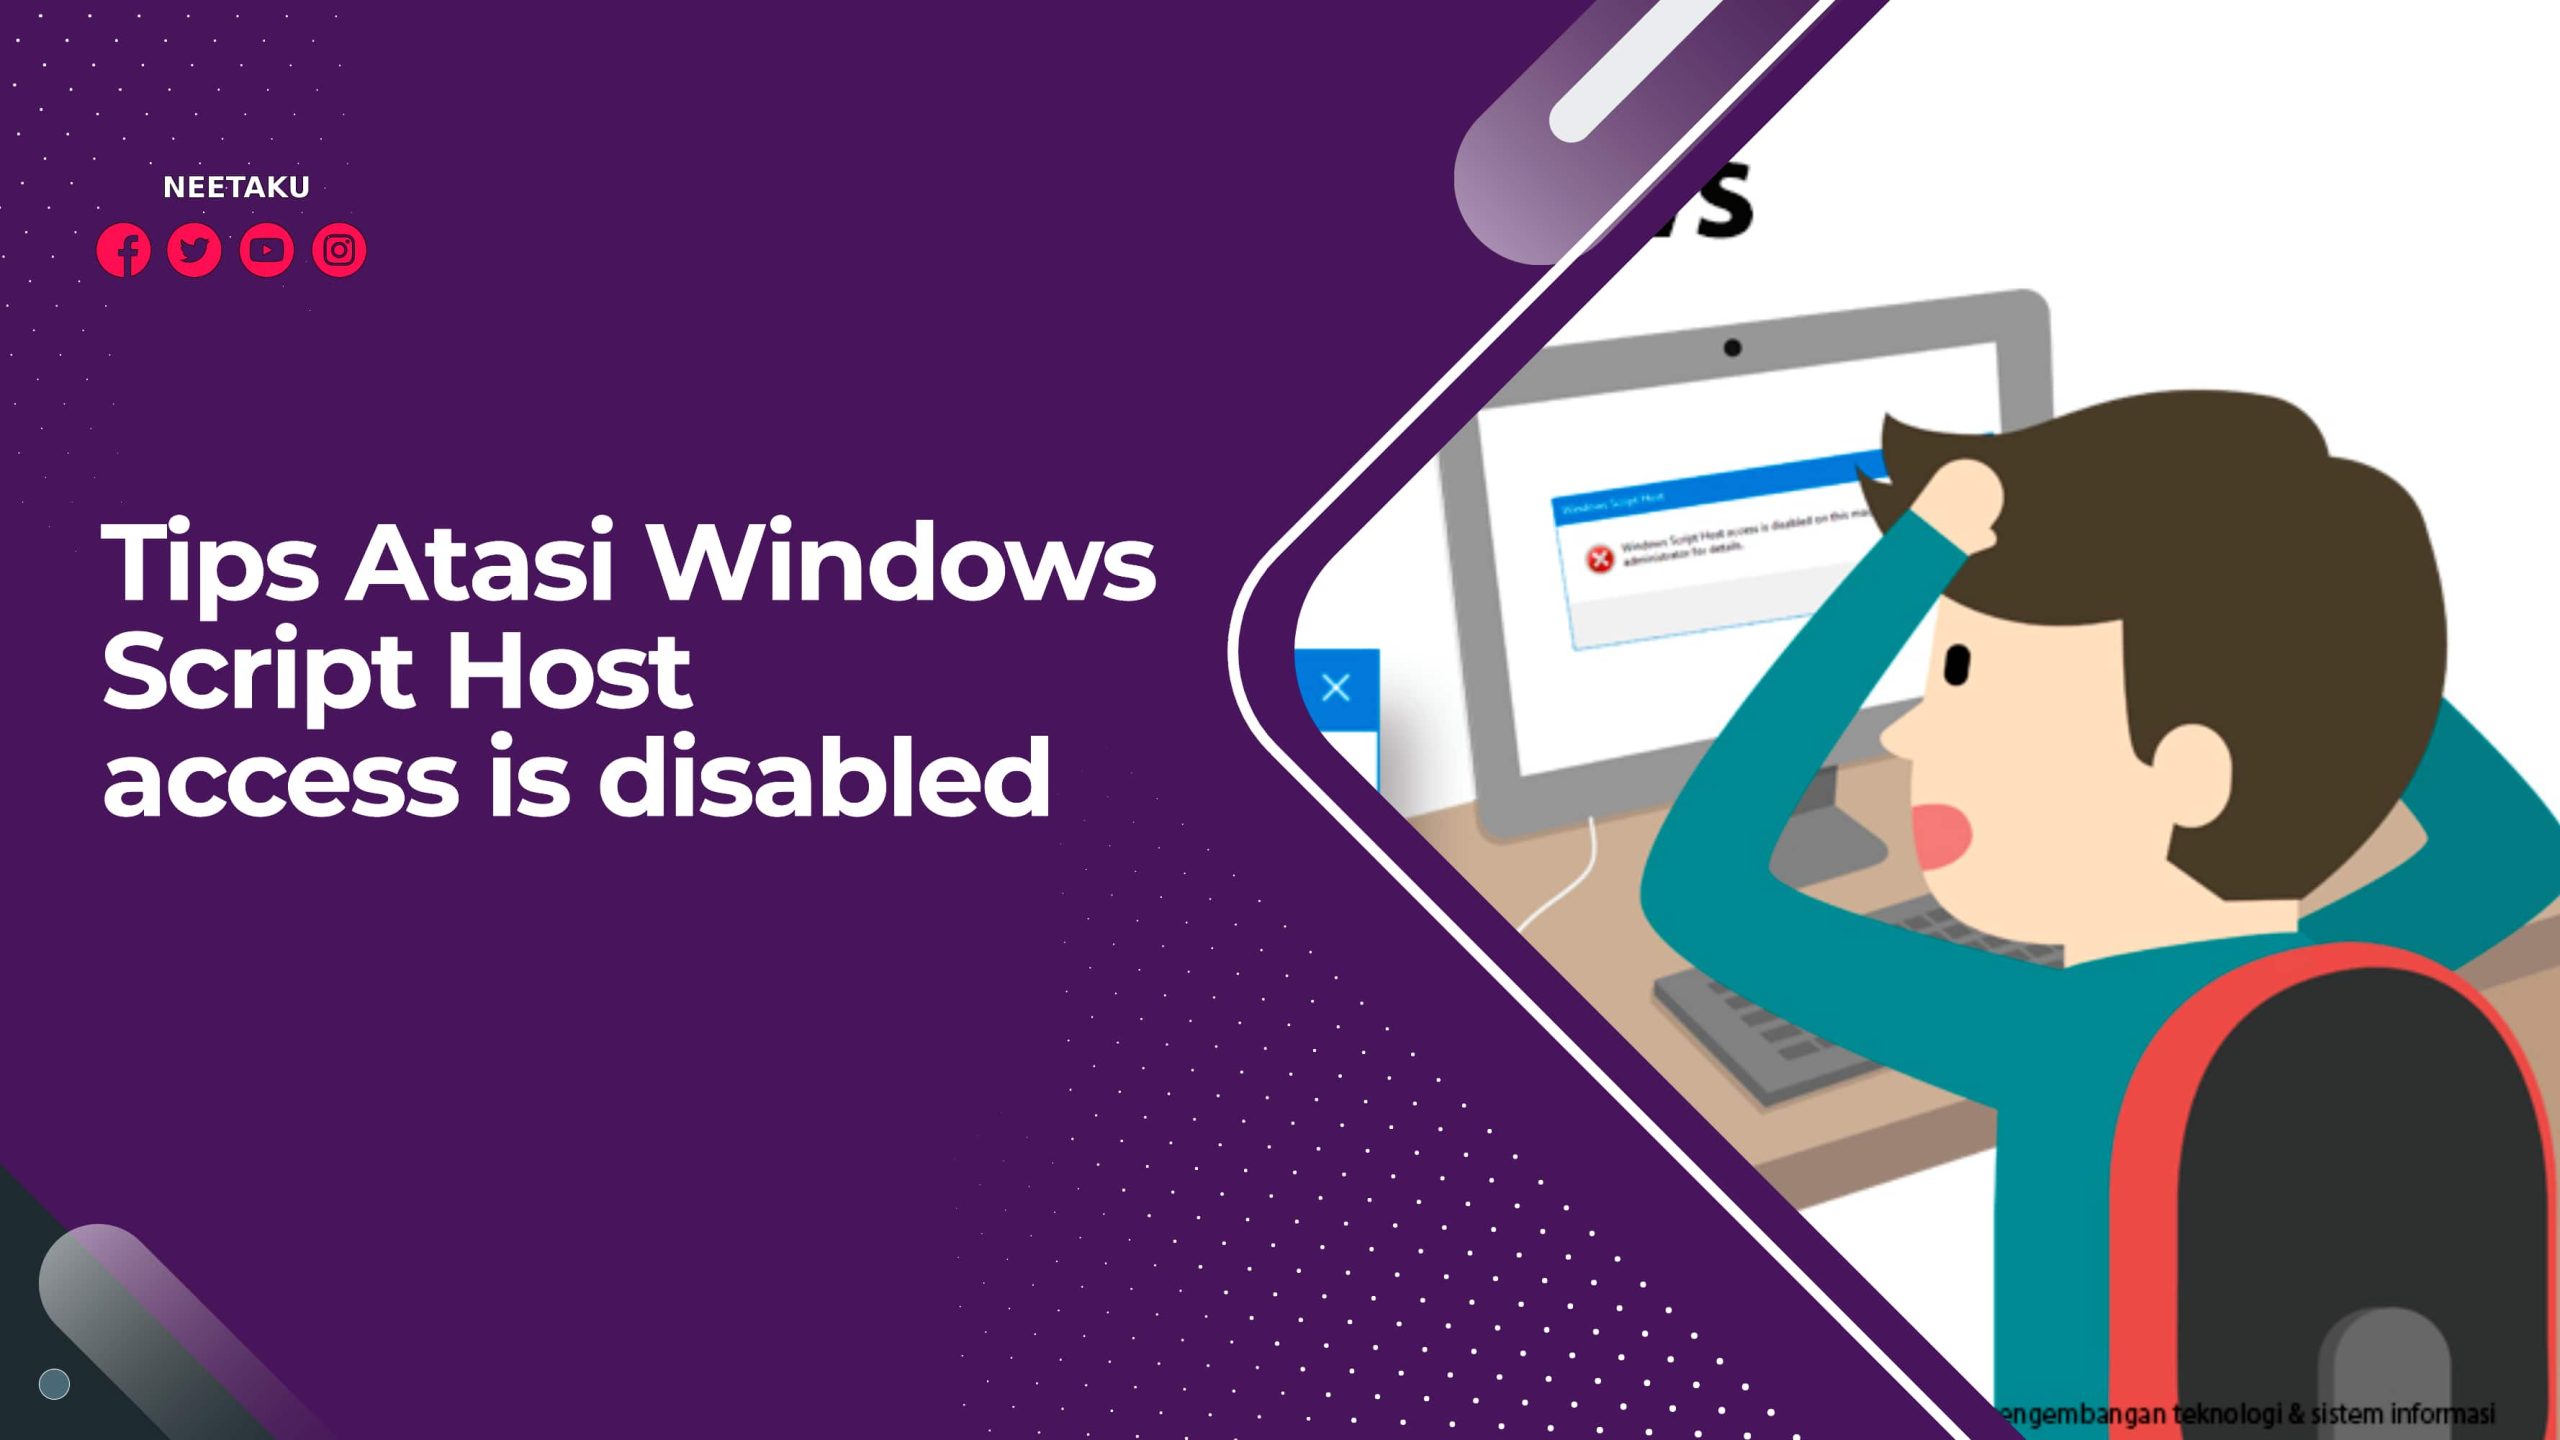 Tips Atasi Windows Script Host access is disabled